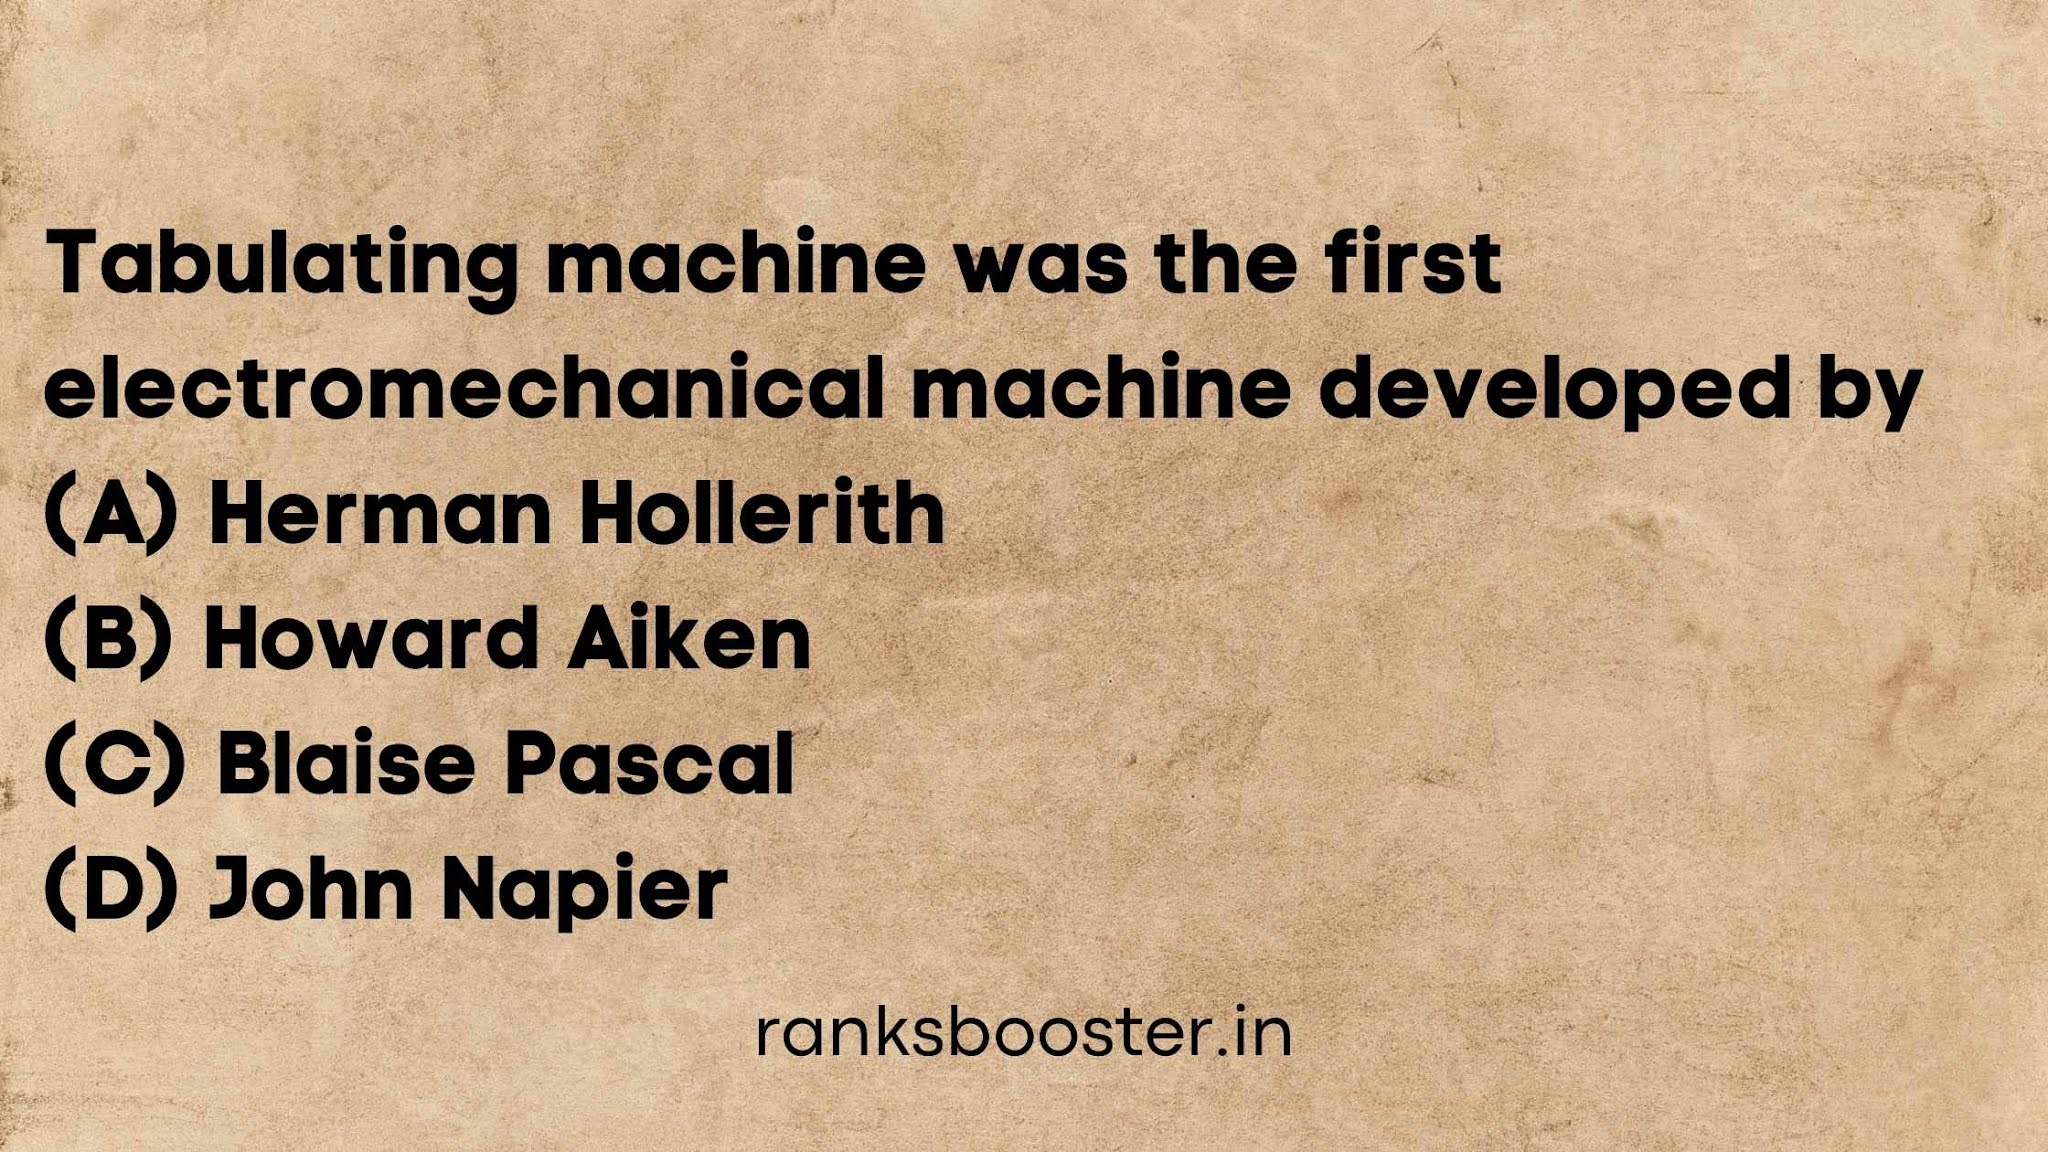 Tabulating machine was the first electromechanical machine developed by (A) Herman Hollerith (B) Howard Aiken (C) Blaise Pascal (D) John Napier